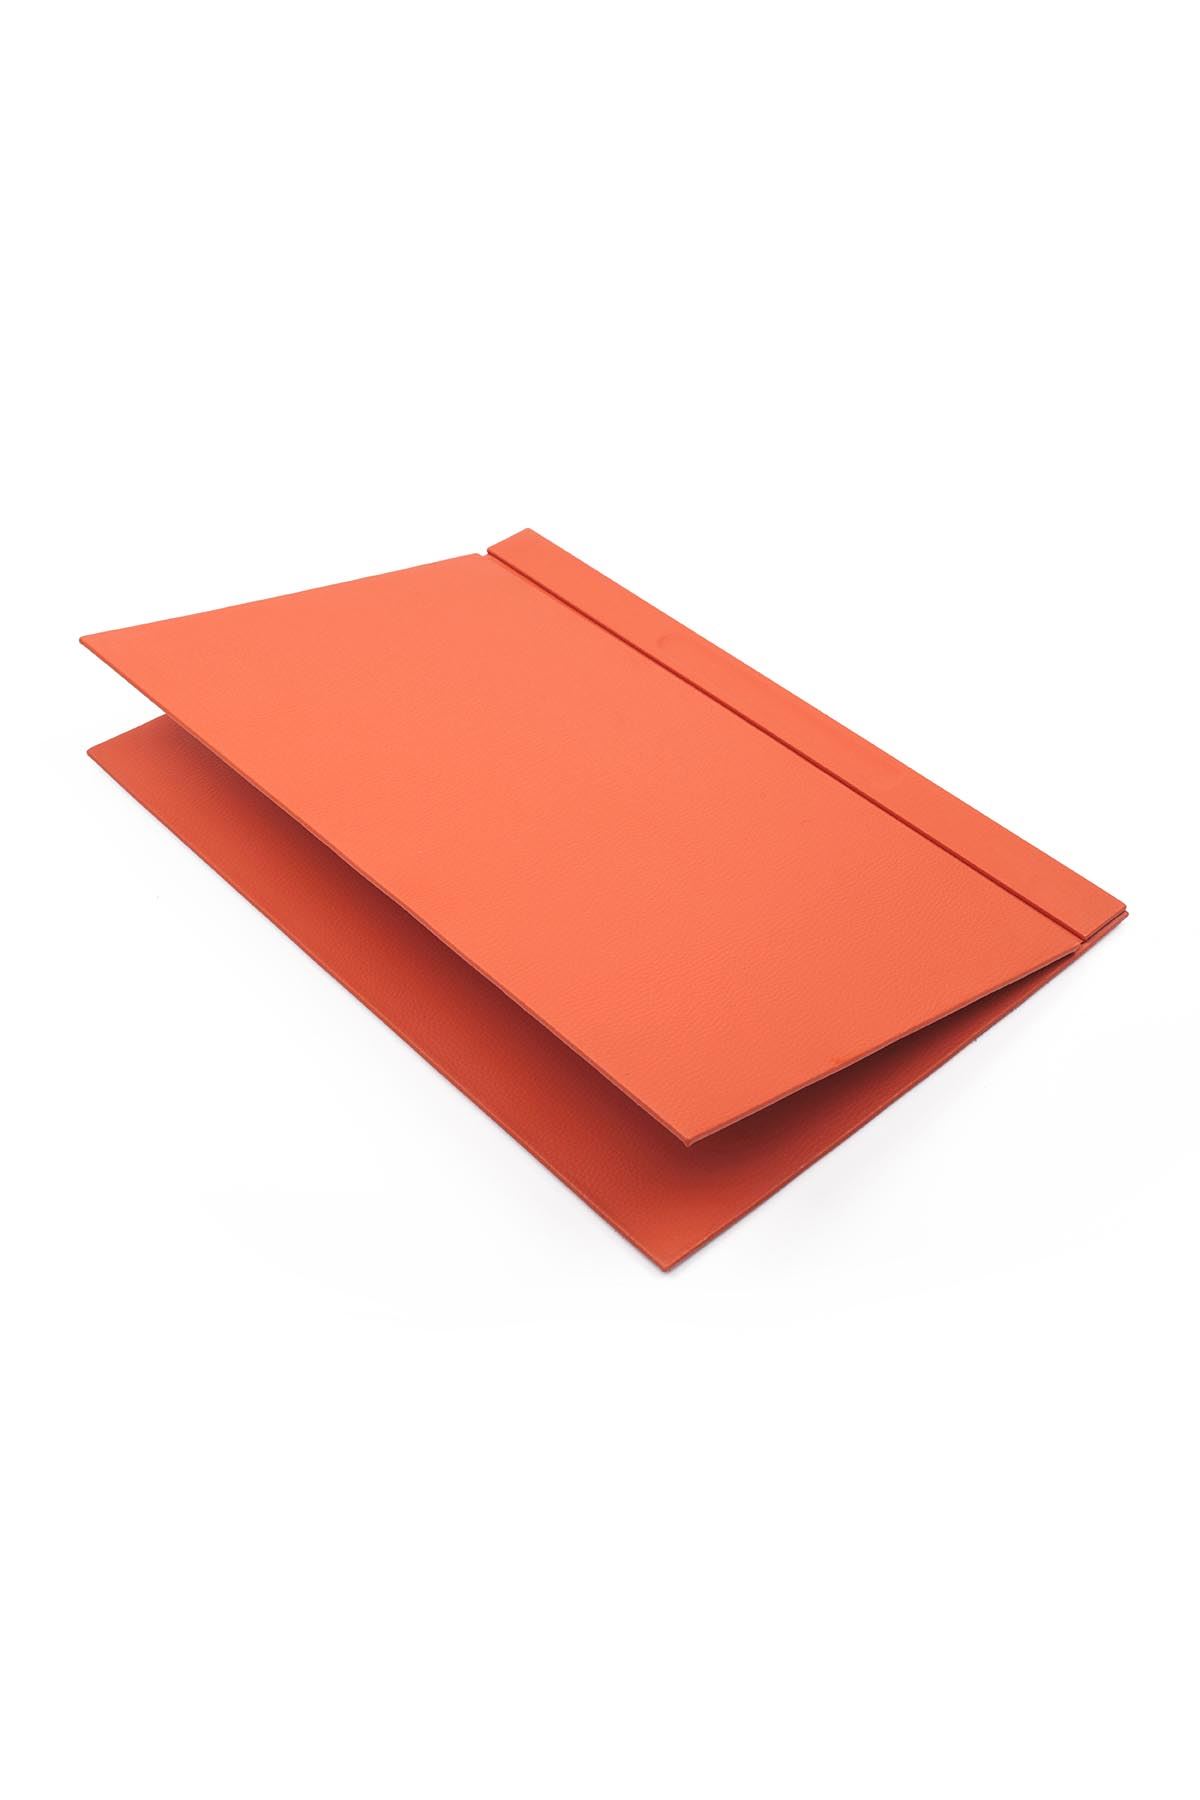 Luxury Leather Desk Set Orange 10 Accessories - Double Document Tray